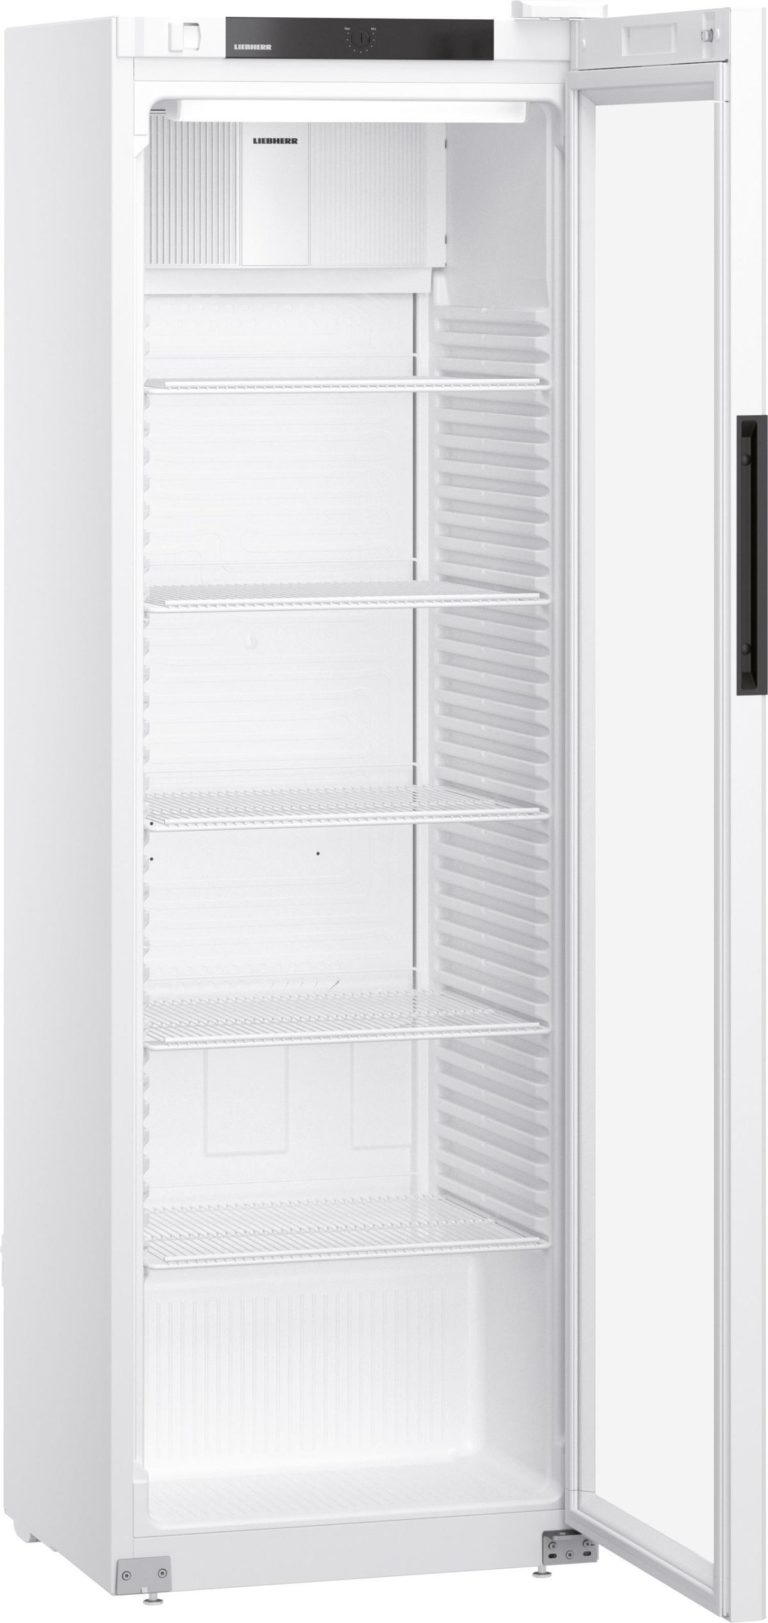 MRFVC-4011-20 LIEBHERR Réfrigérateur ventilé